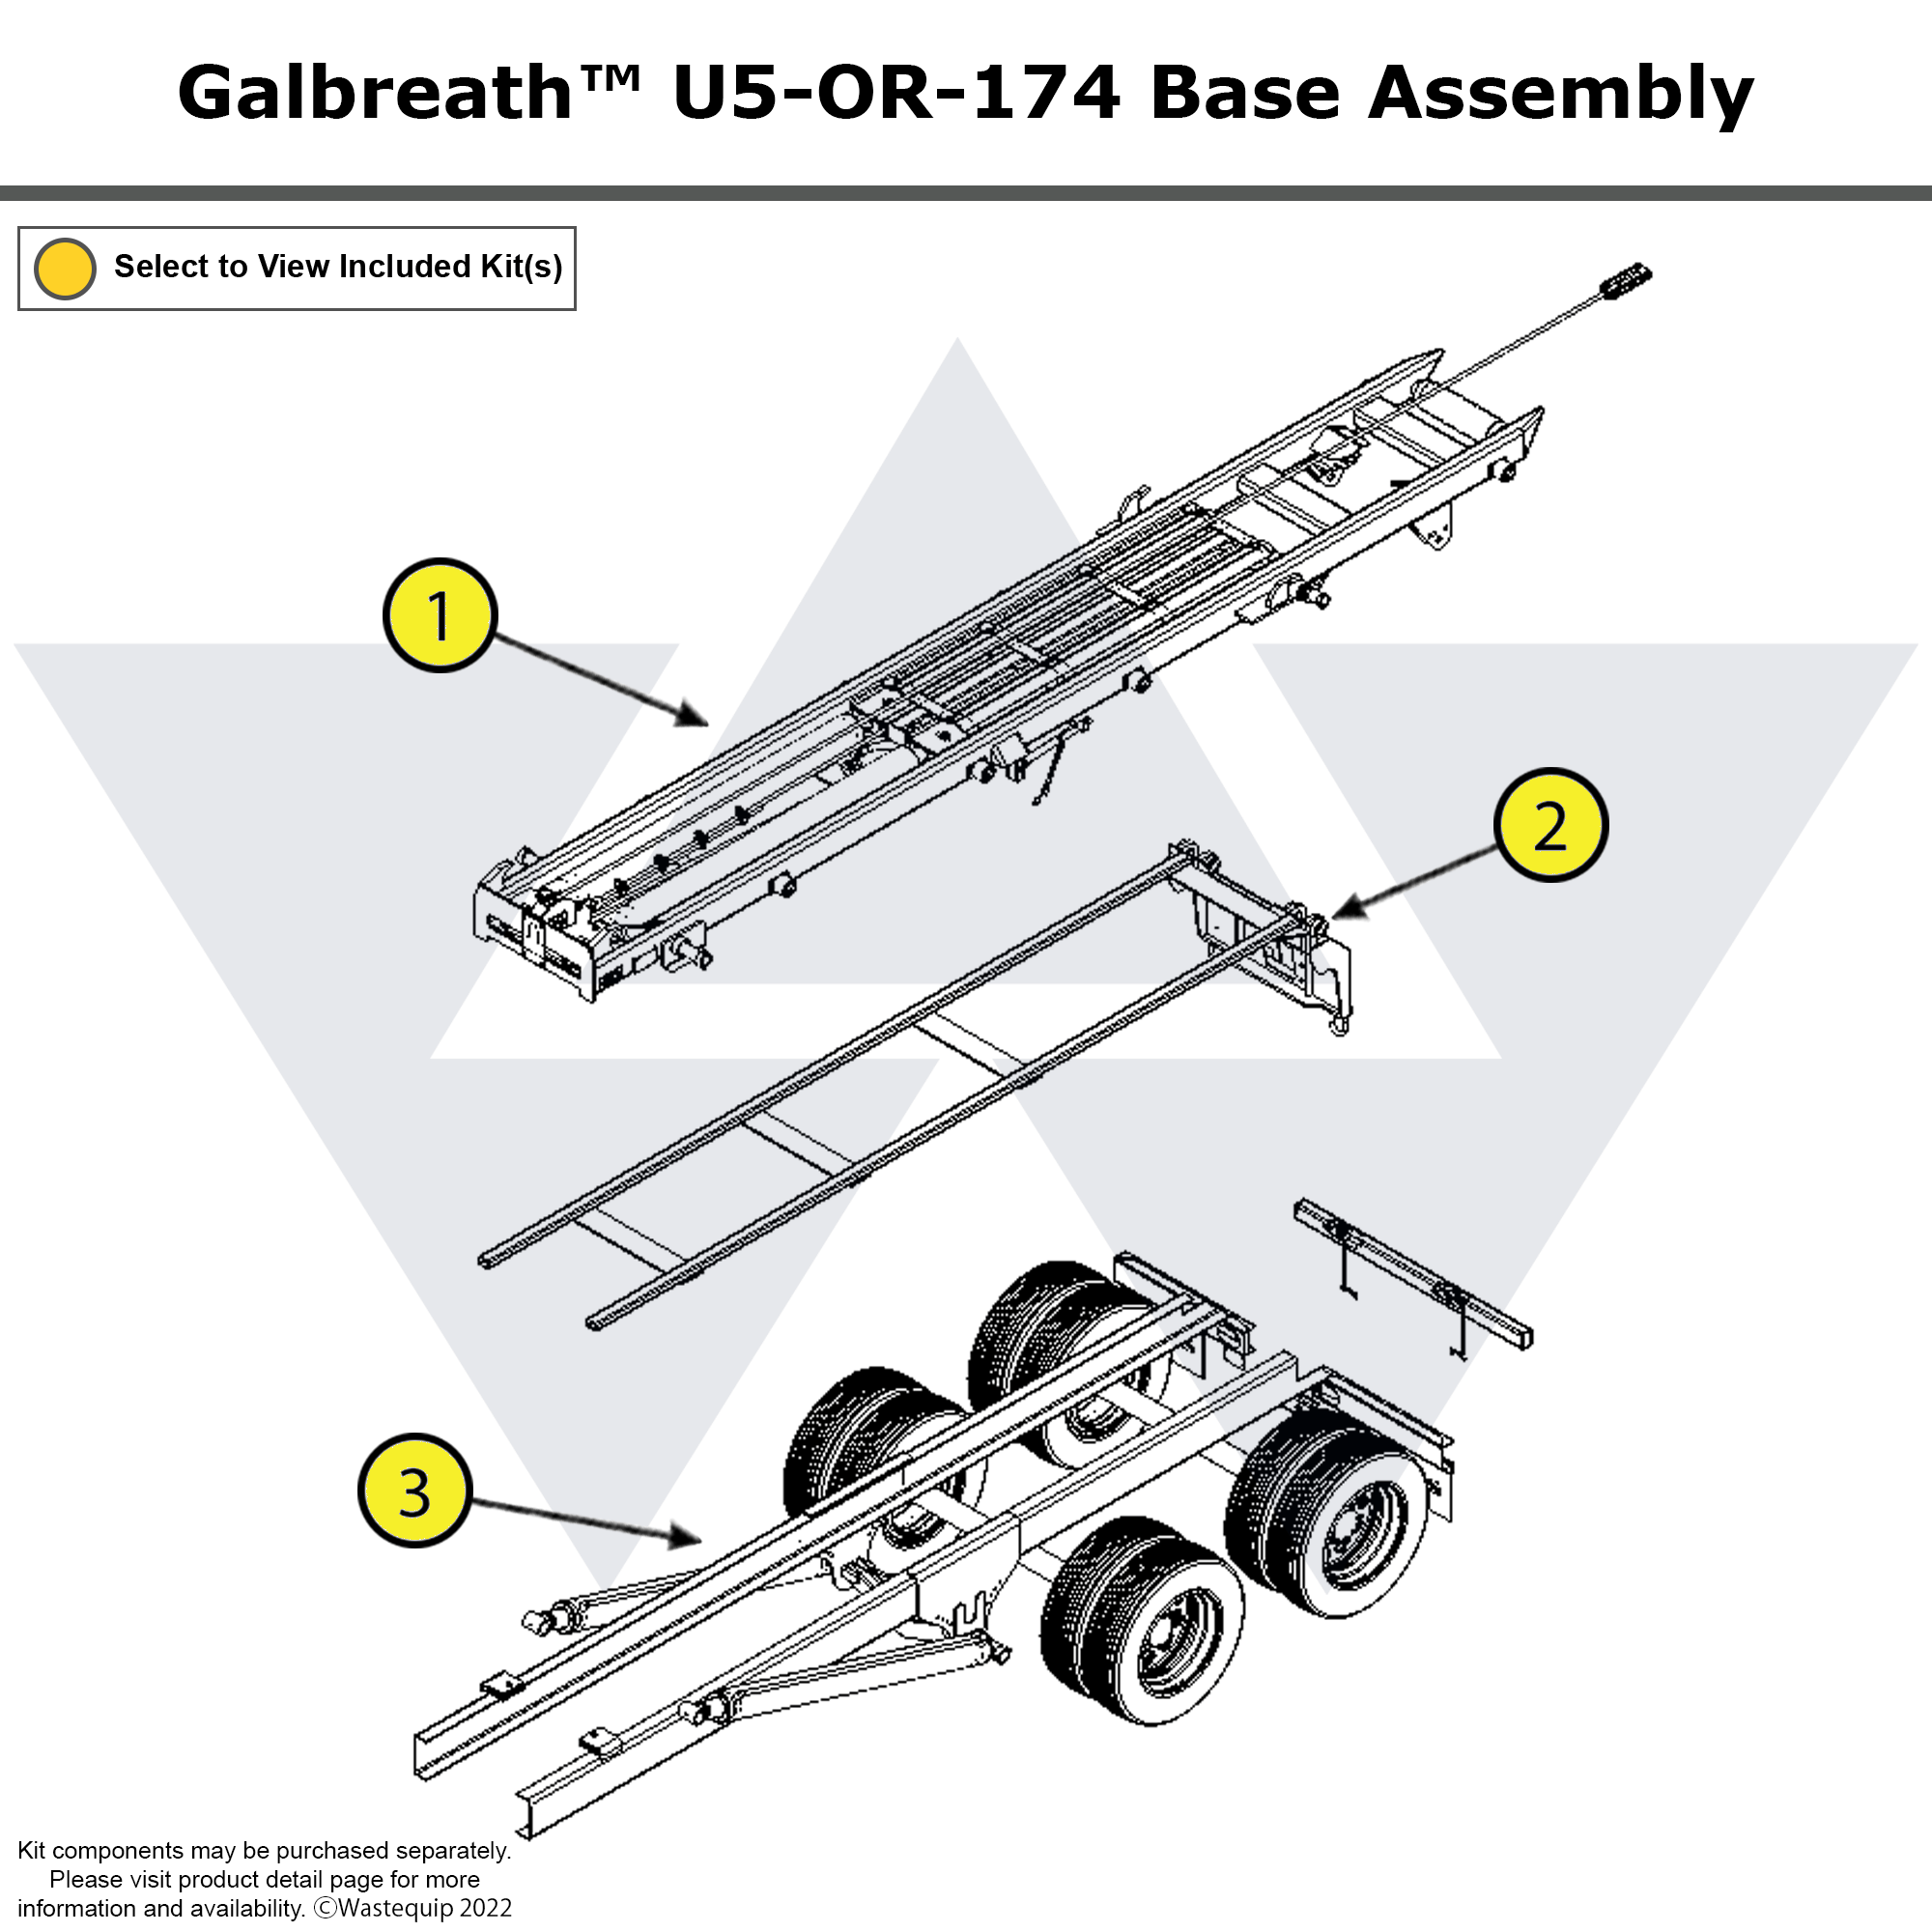 Galbreath™ Hoist U5-OR-174 Assembly